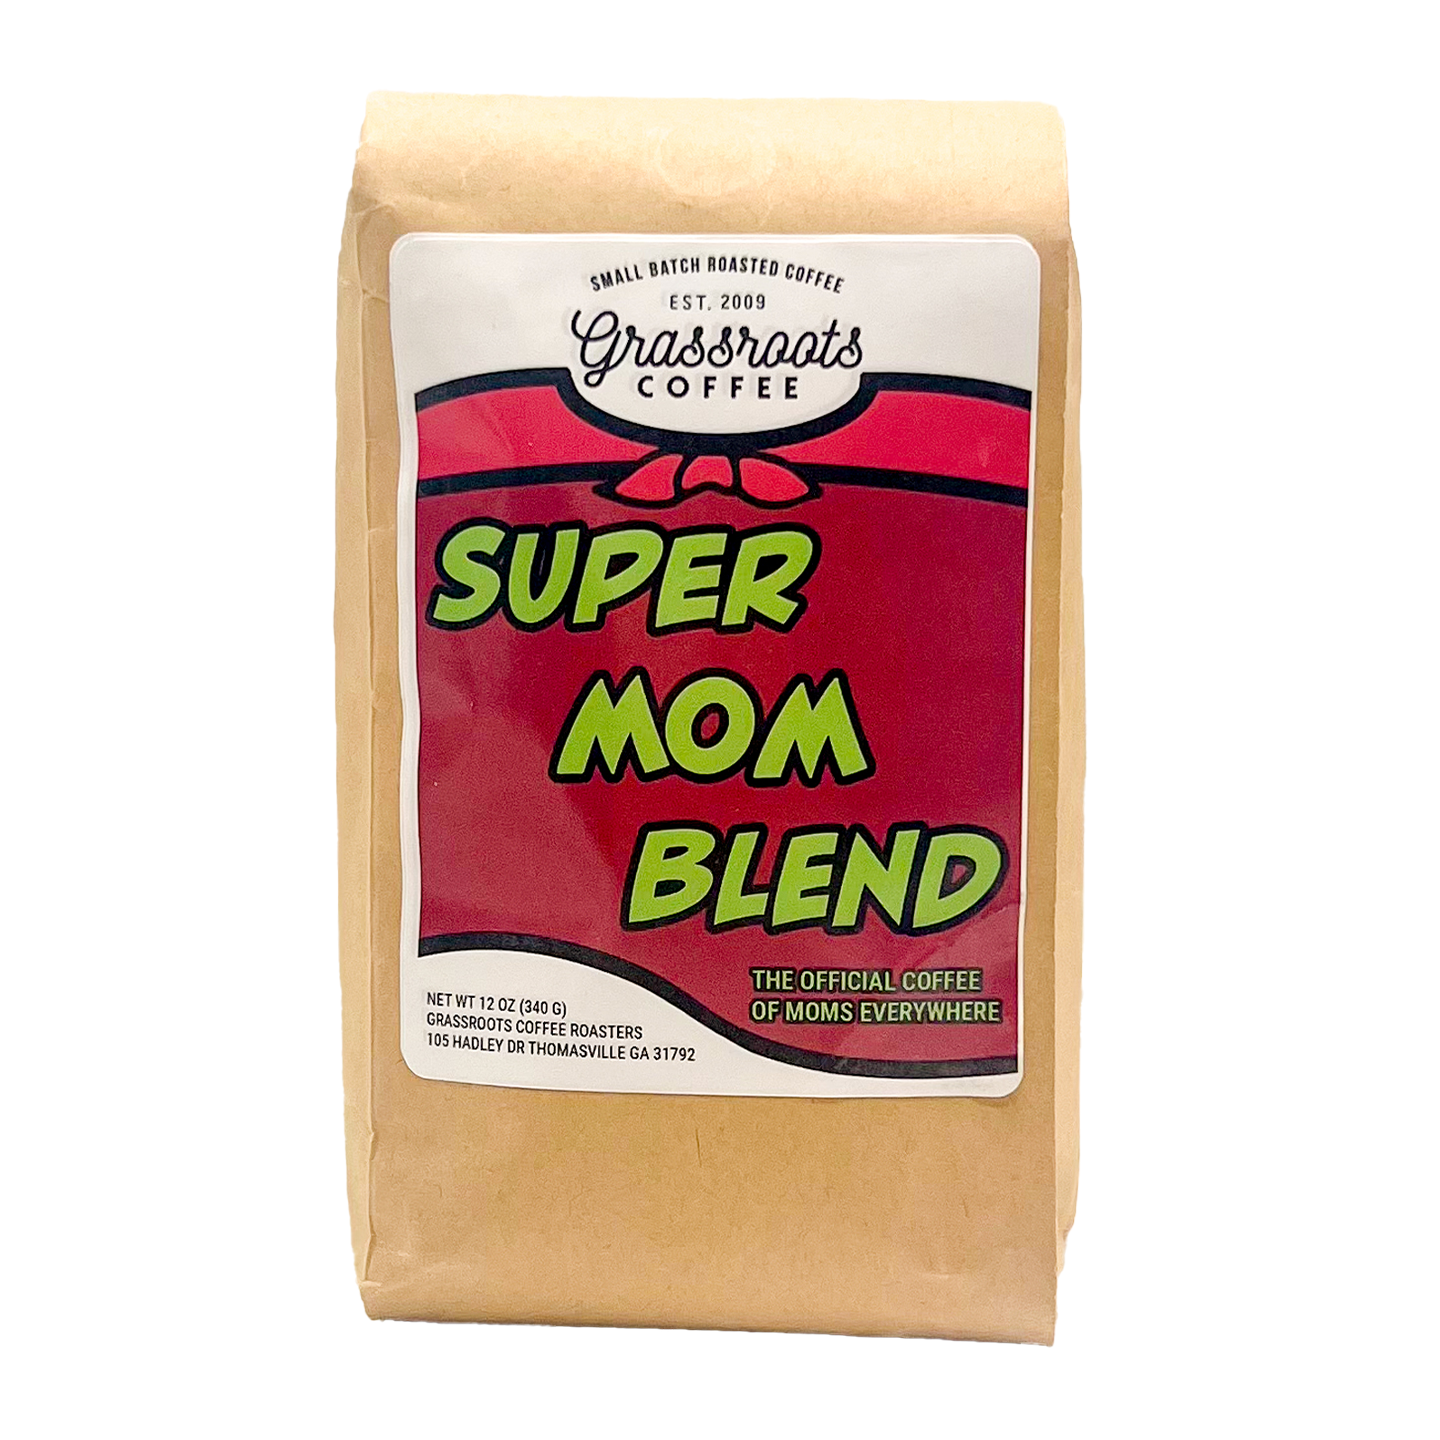 Super Mom Blend